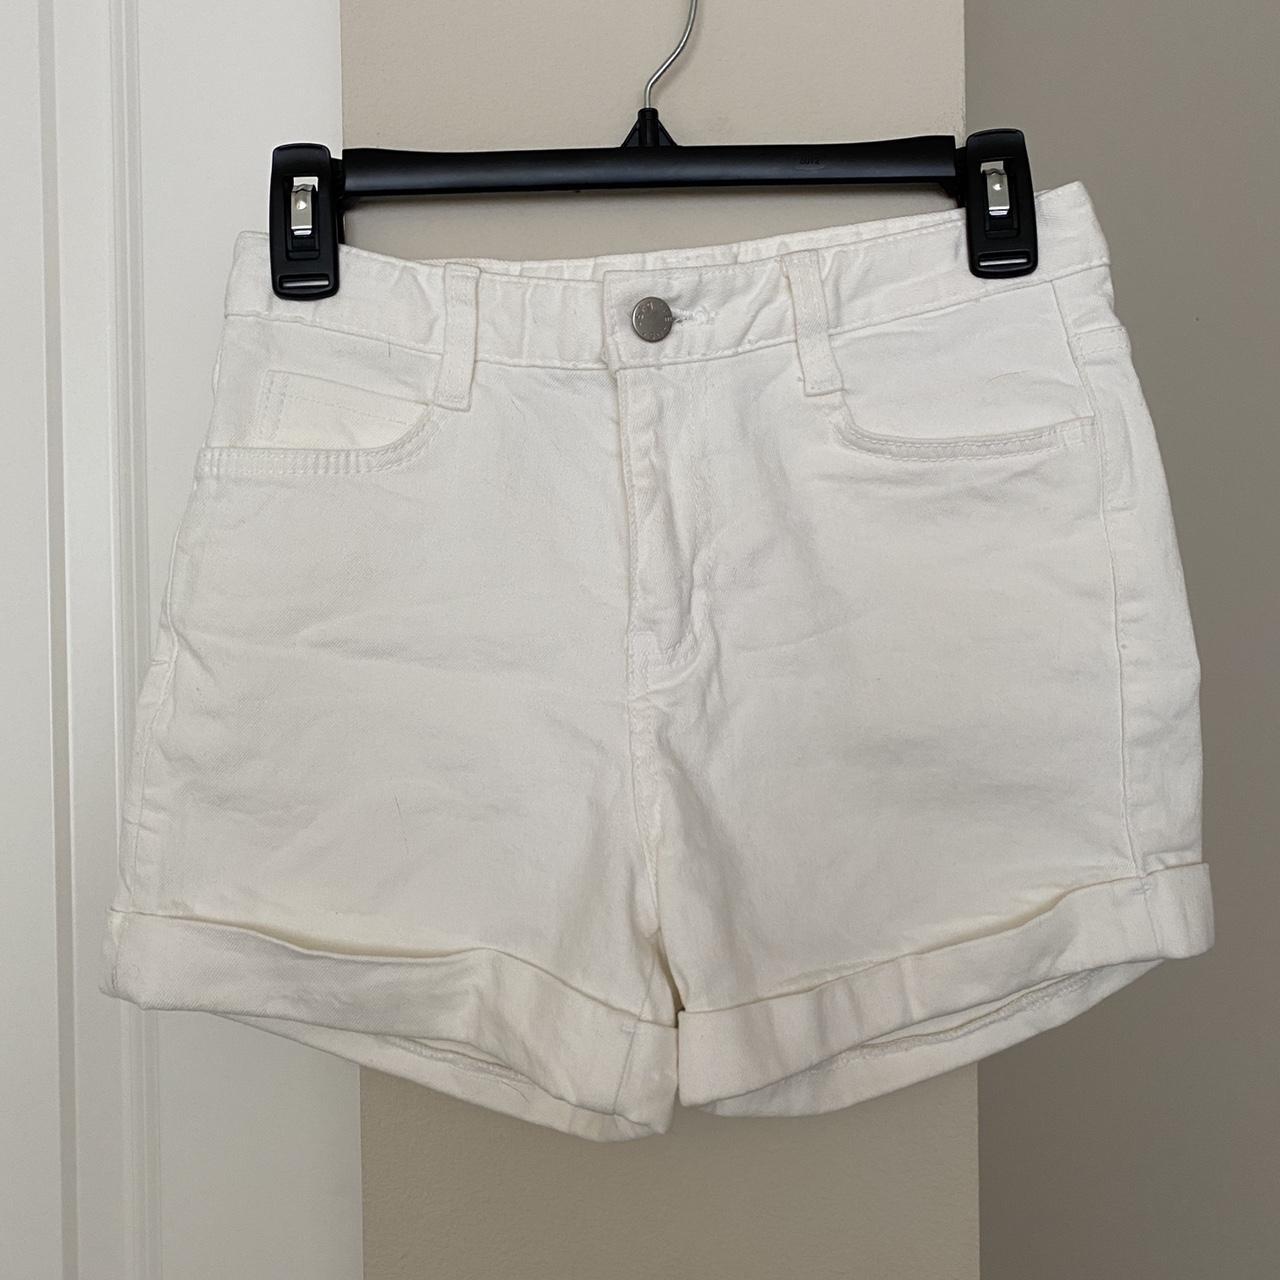 📦 FREE SHIPPING 📦 Chuu -5kg jean white shorts -... - Depop